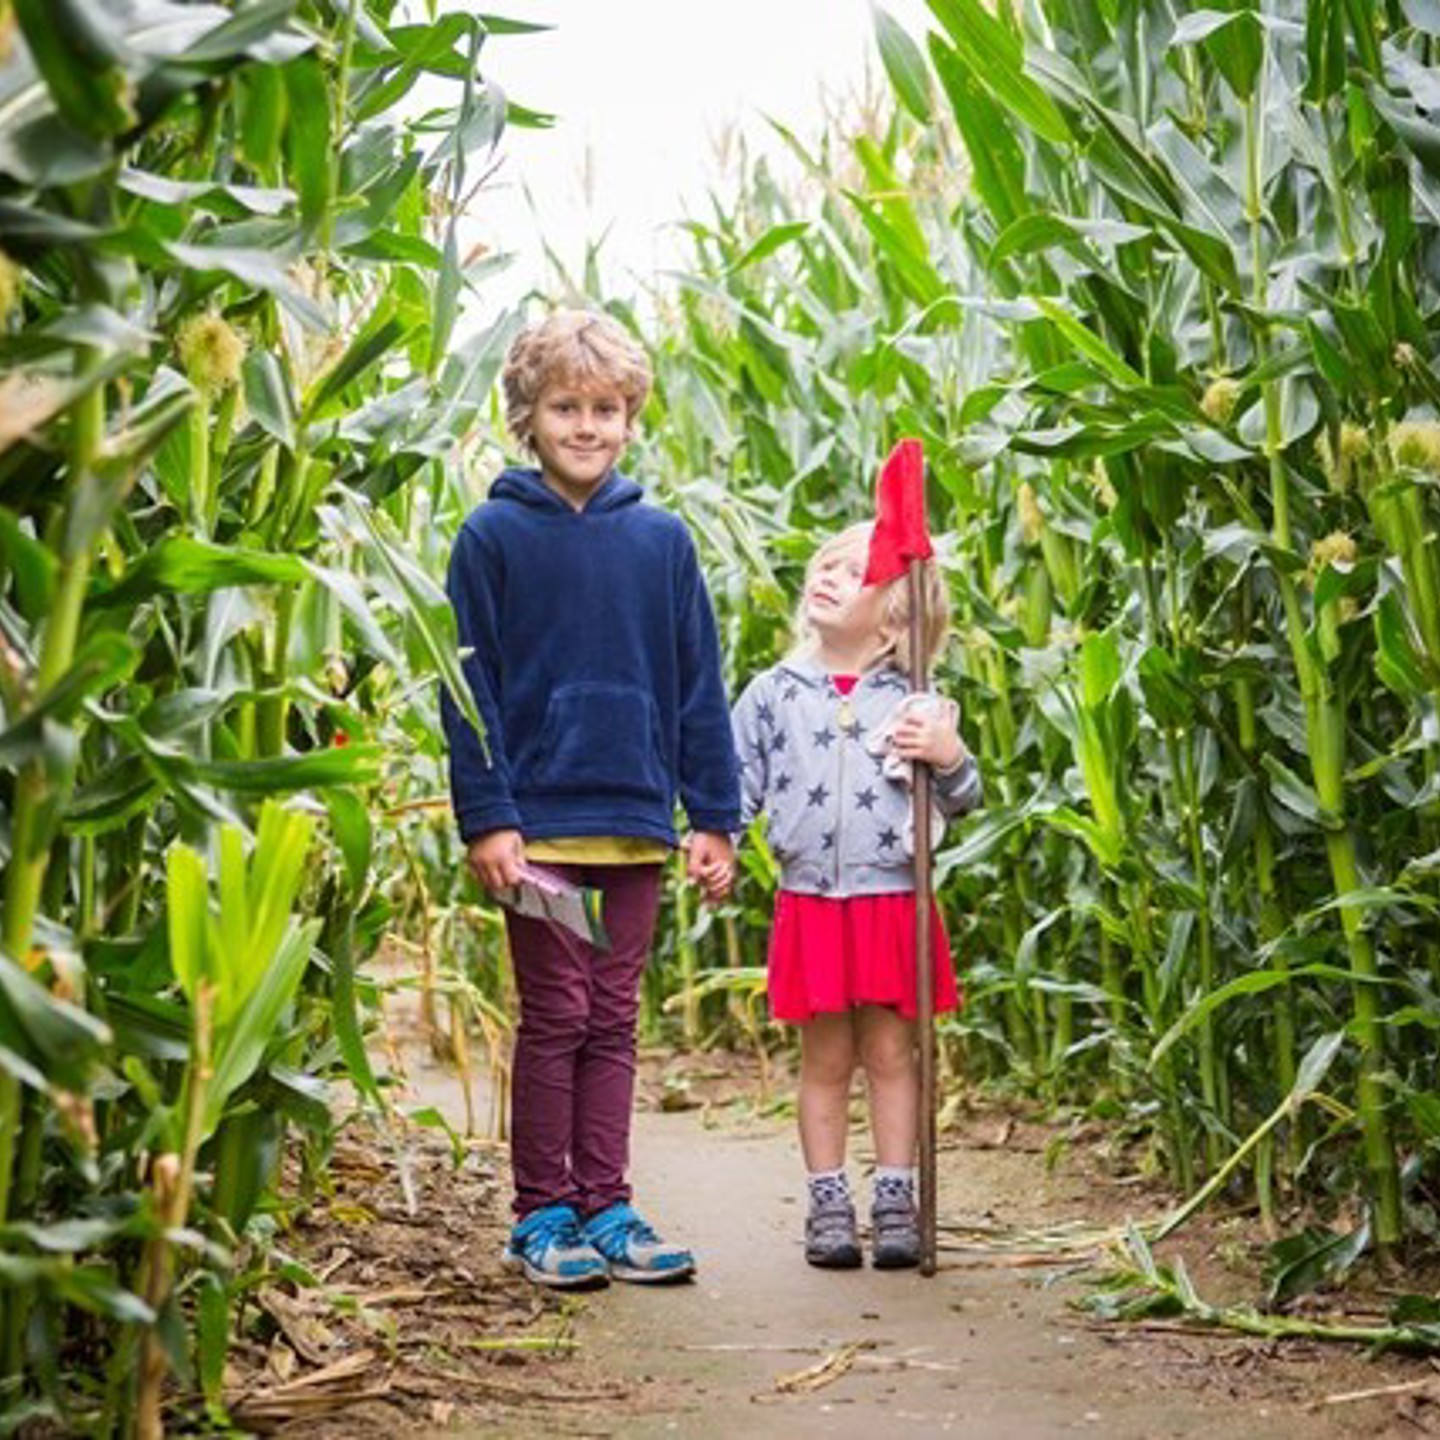 Kids exploring the corn field